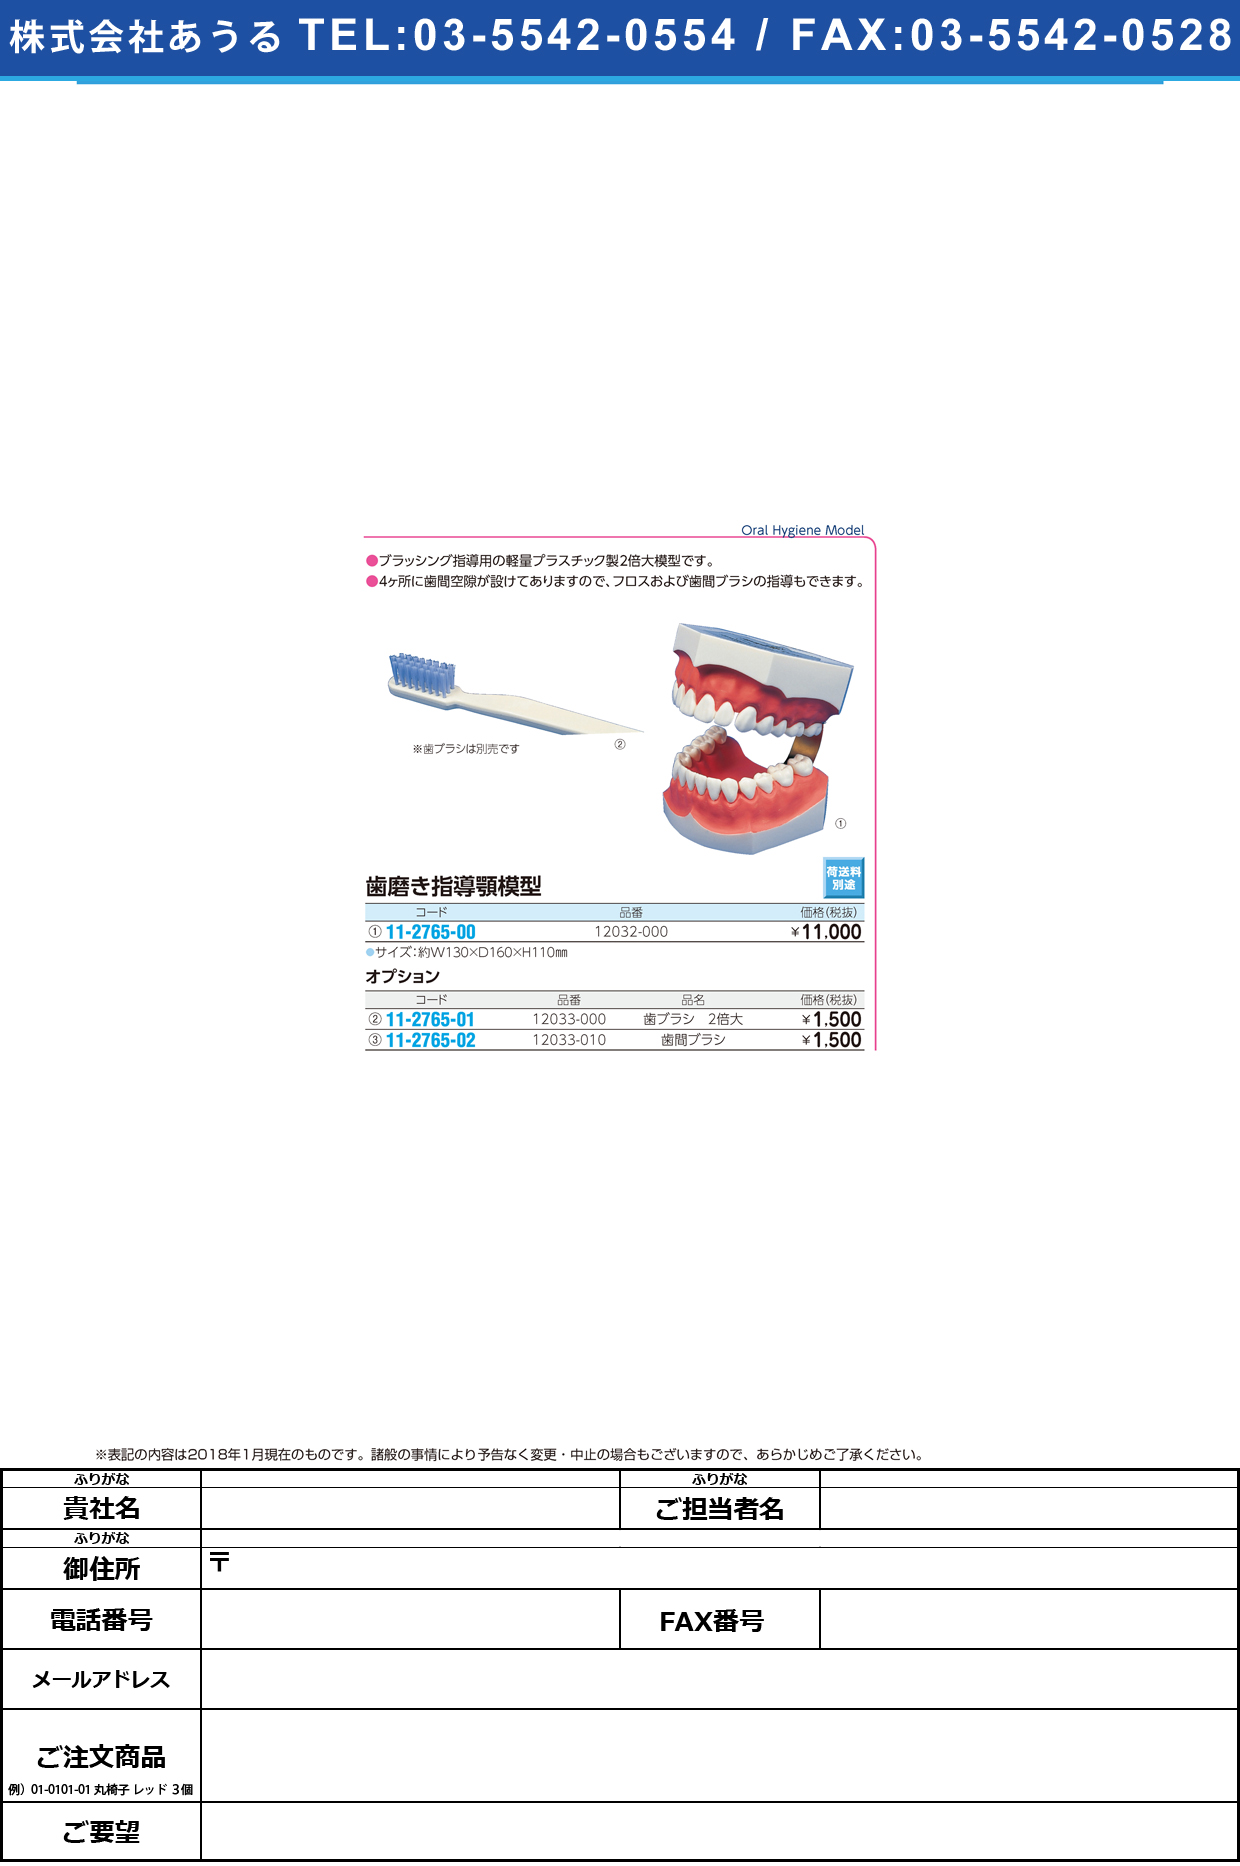 (11-2765-00)２倍大歯磨き指導用模型 12032-000(NNS3) ﾊﾐｶﾞｷｼﾄﾞｳﾓｹｲ(京都科学)【1台単位】【2019年カタログ商品】